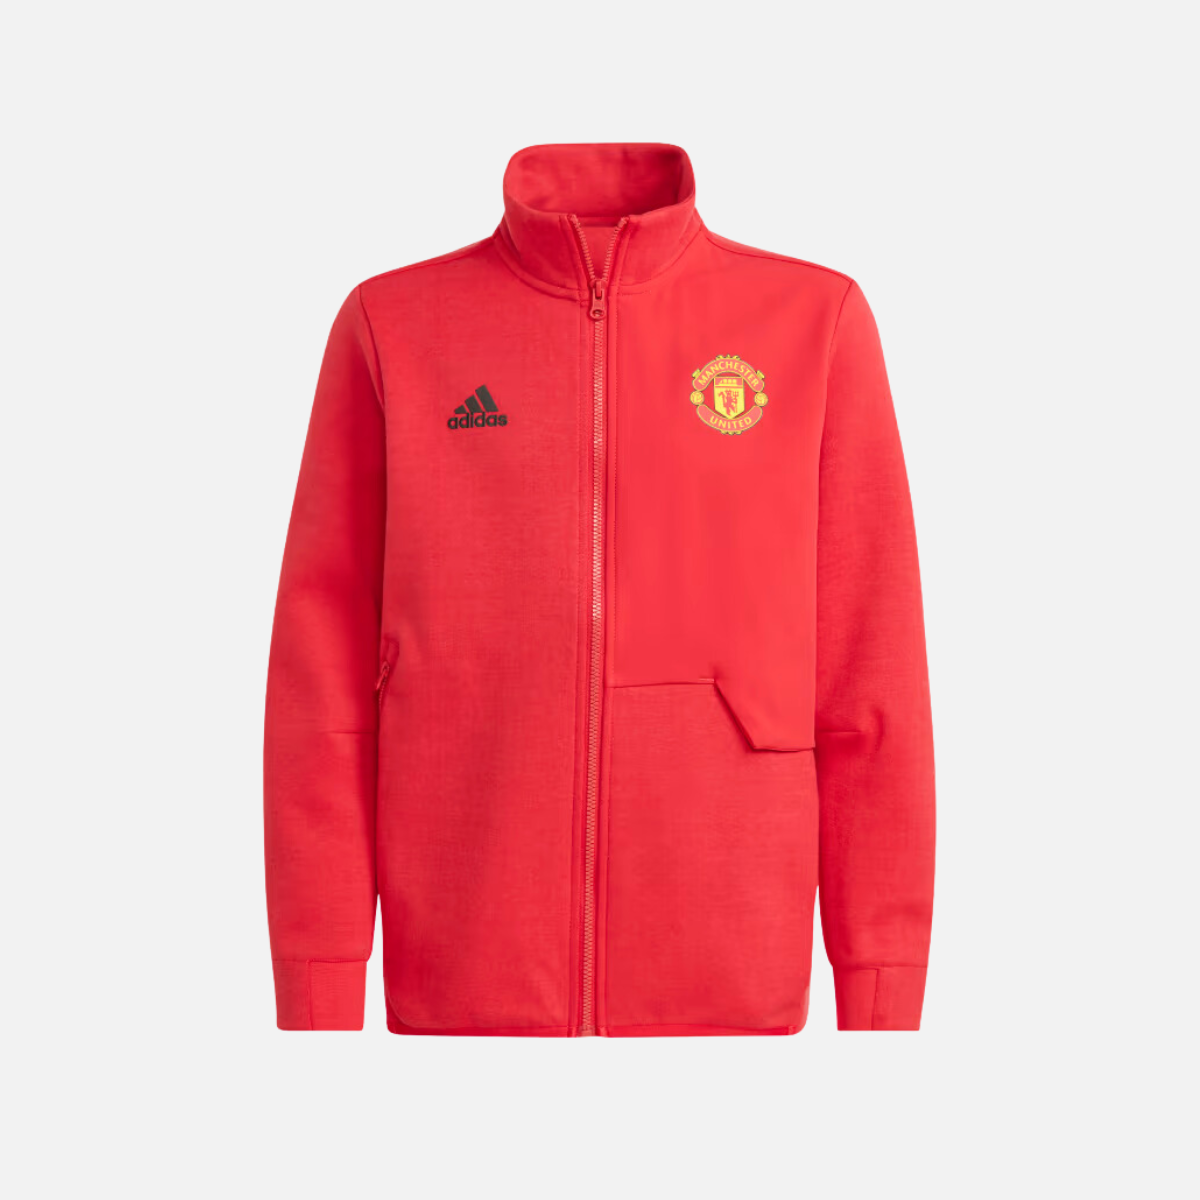 Adidas Manchester United Anthem Kids Unisex Jacket (7-16 Years) -Real Red